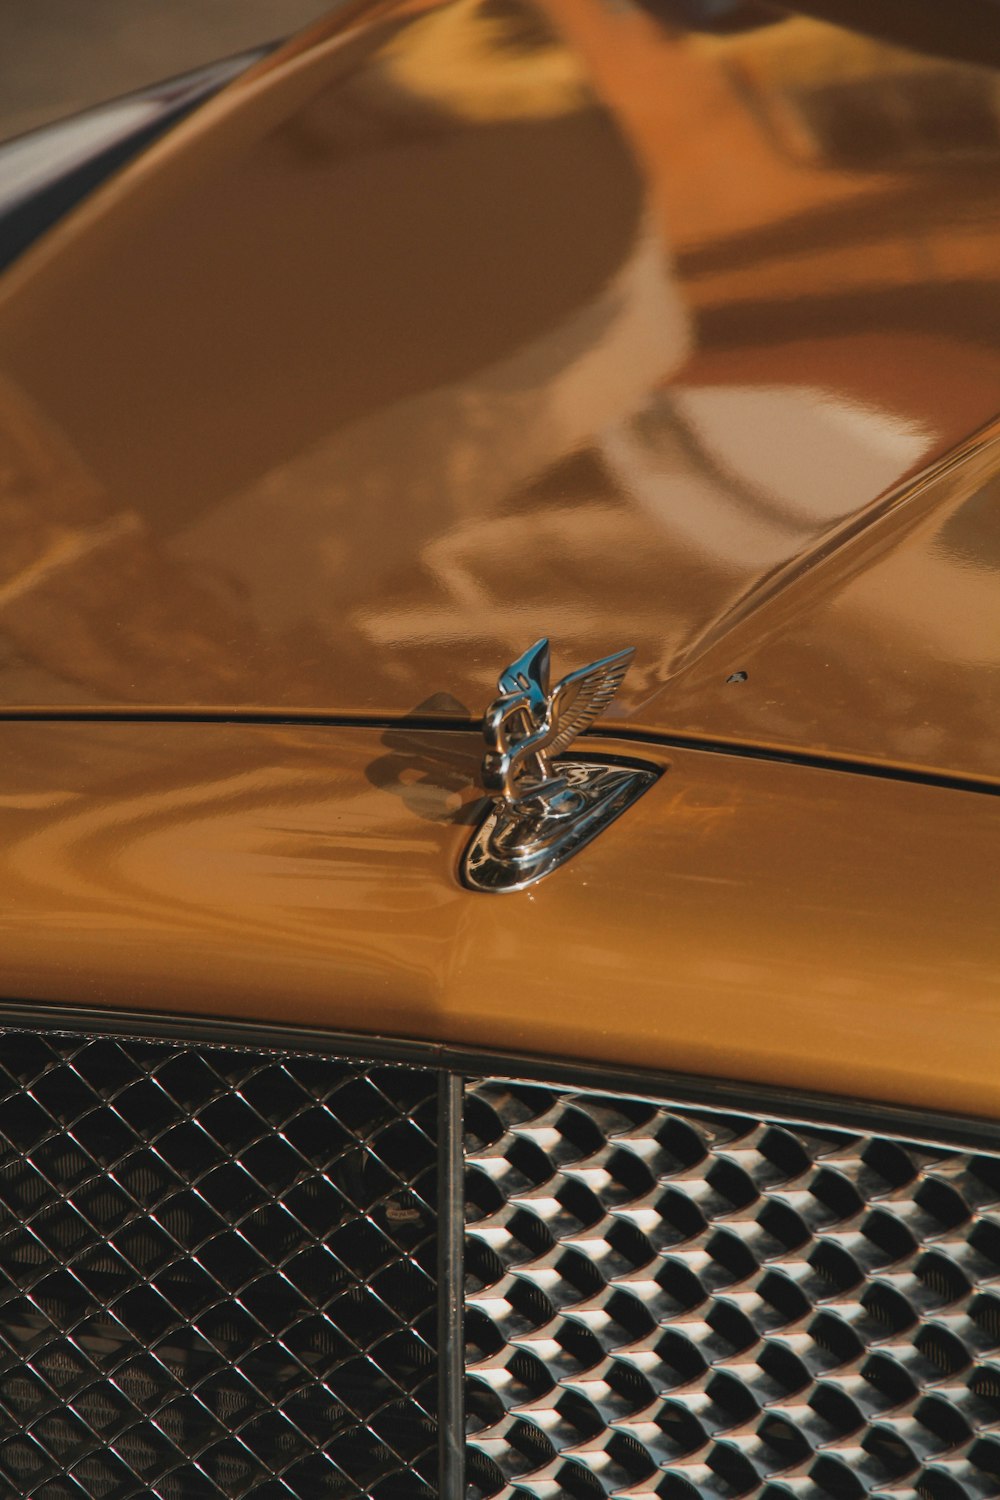 a close up of the hood ornament of a car